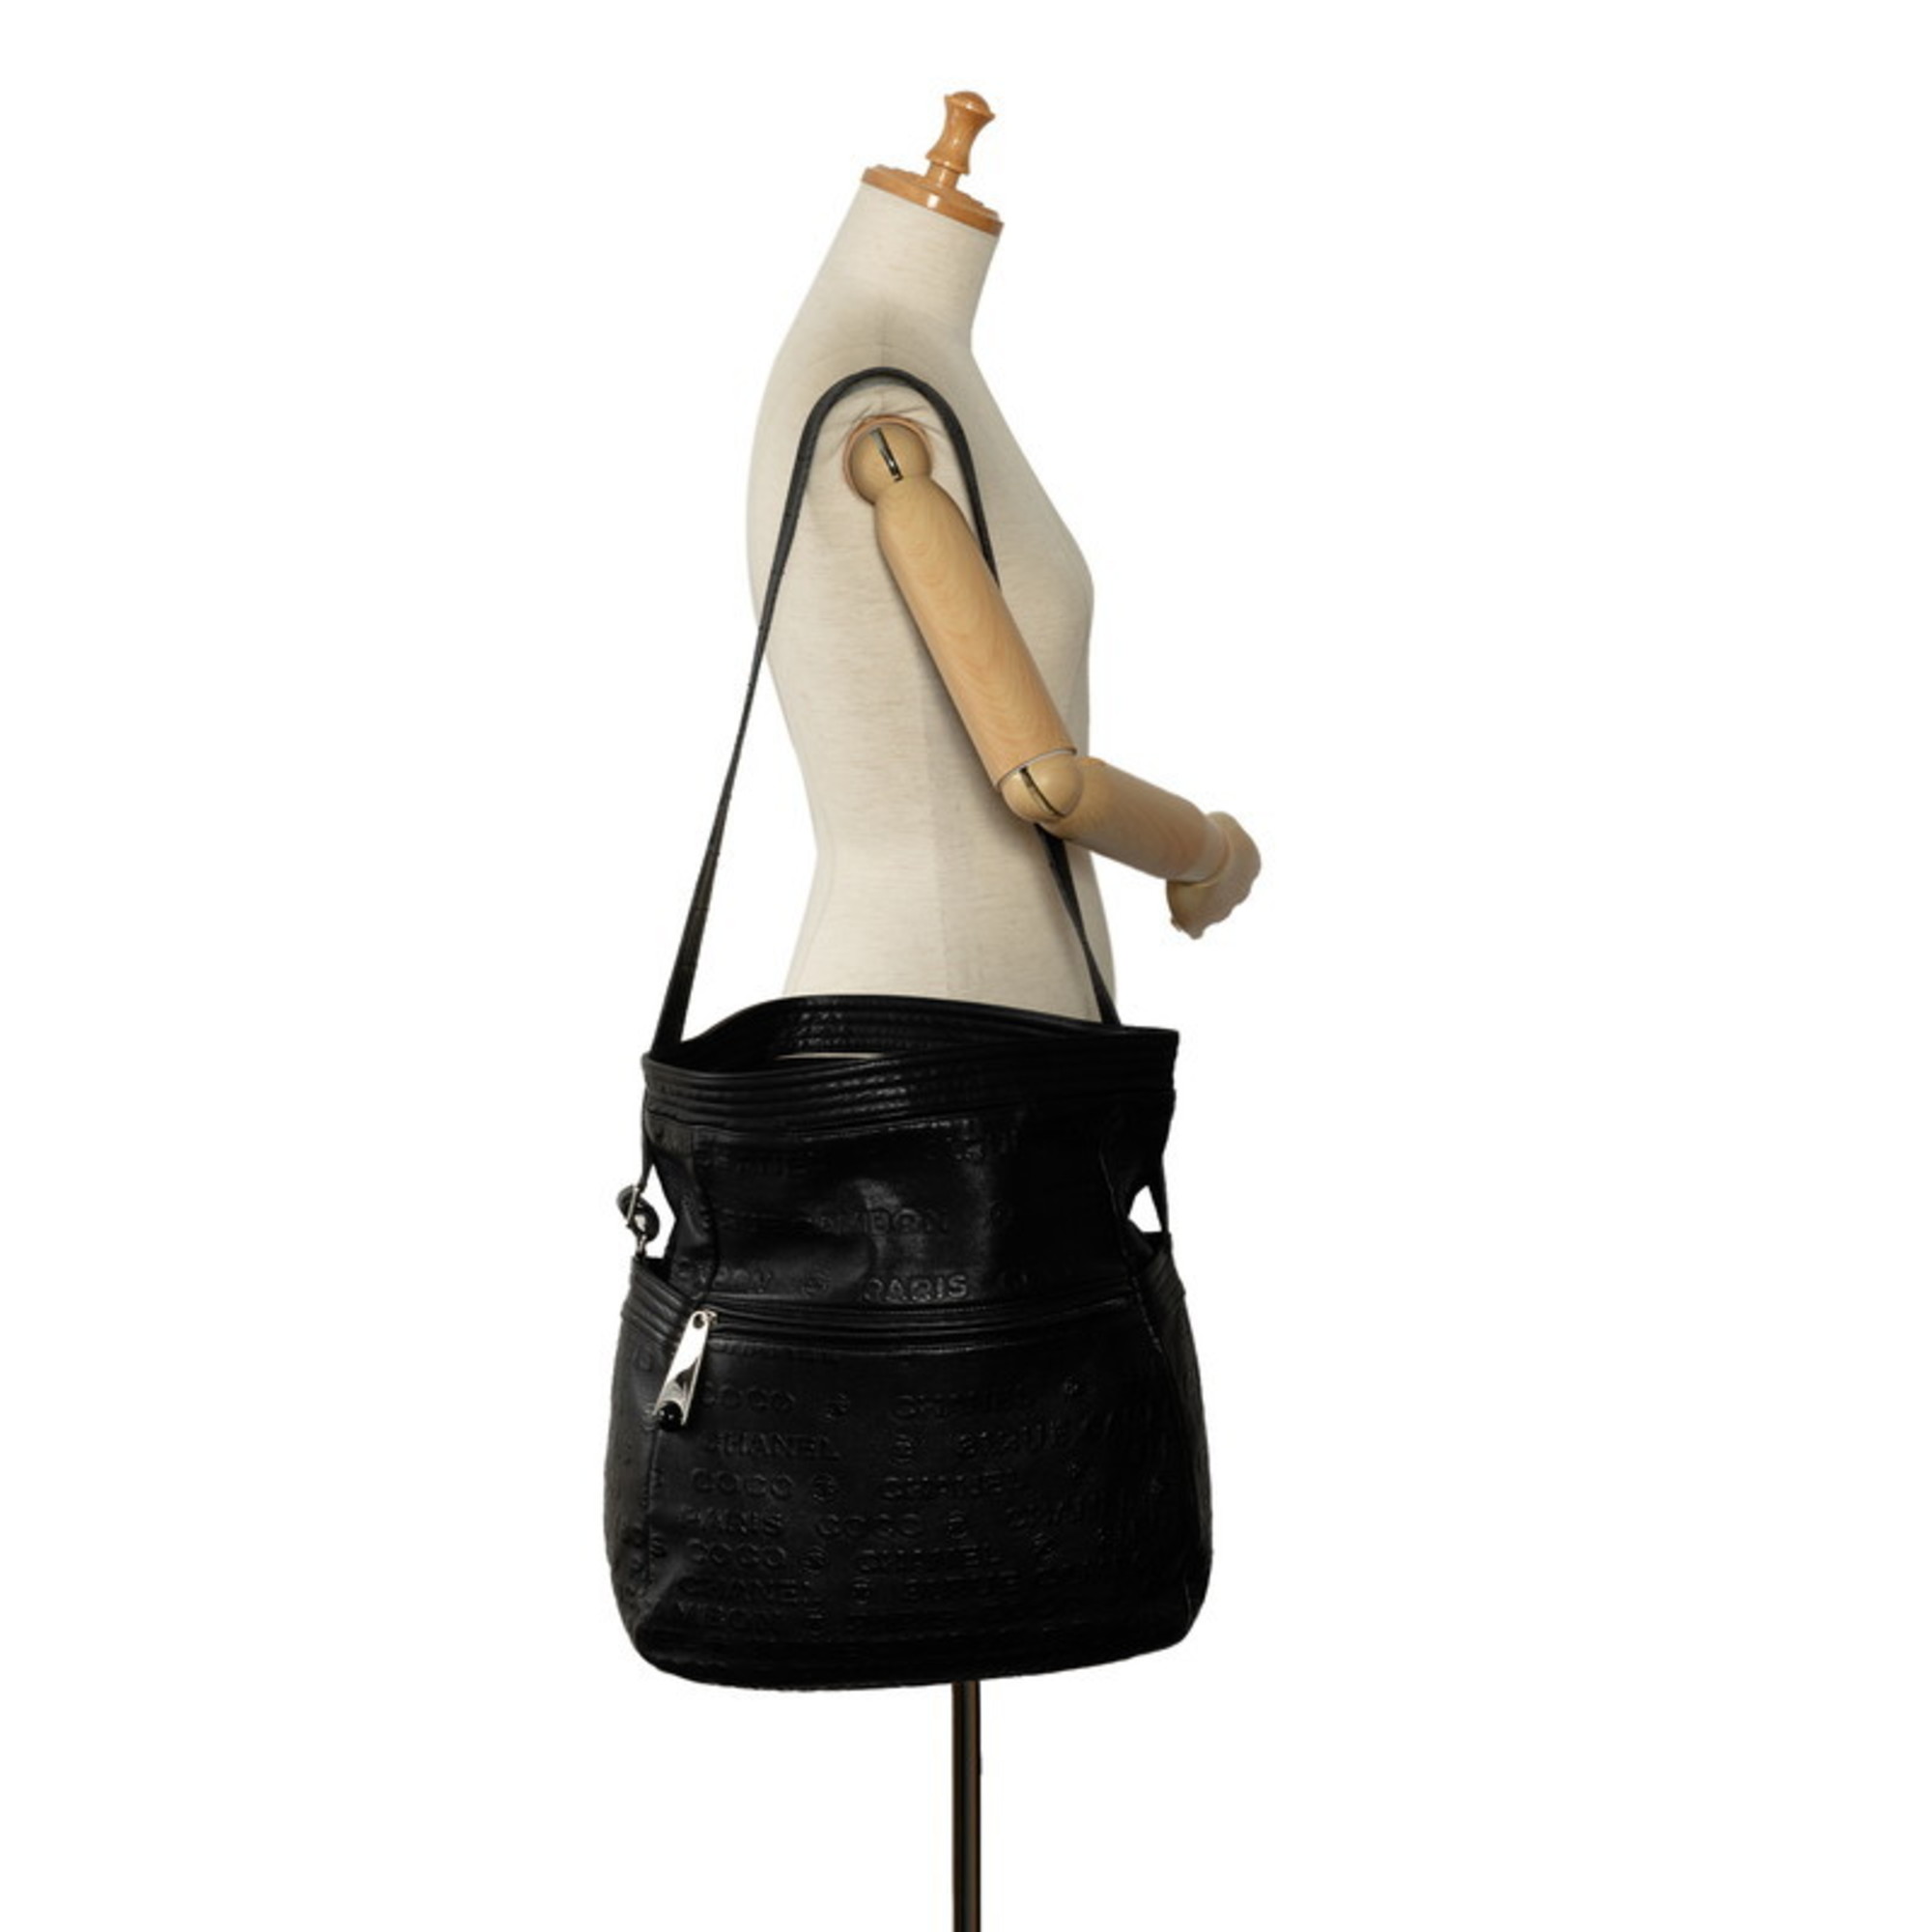 Chanel Unlimited Handbag Shoulder Bag Black Lambskin Women's CHANEL